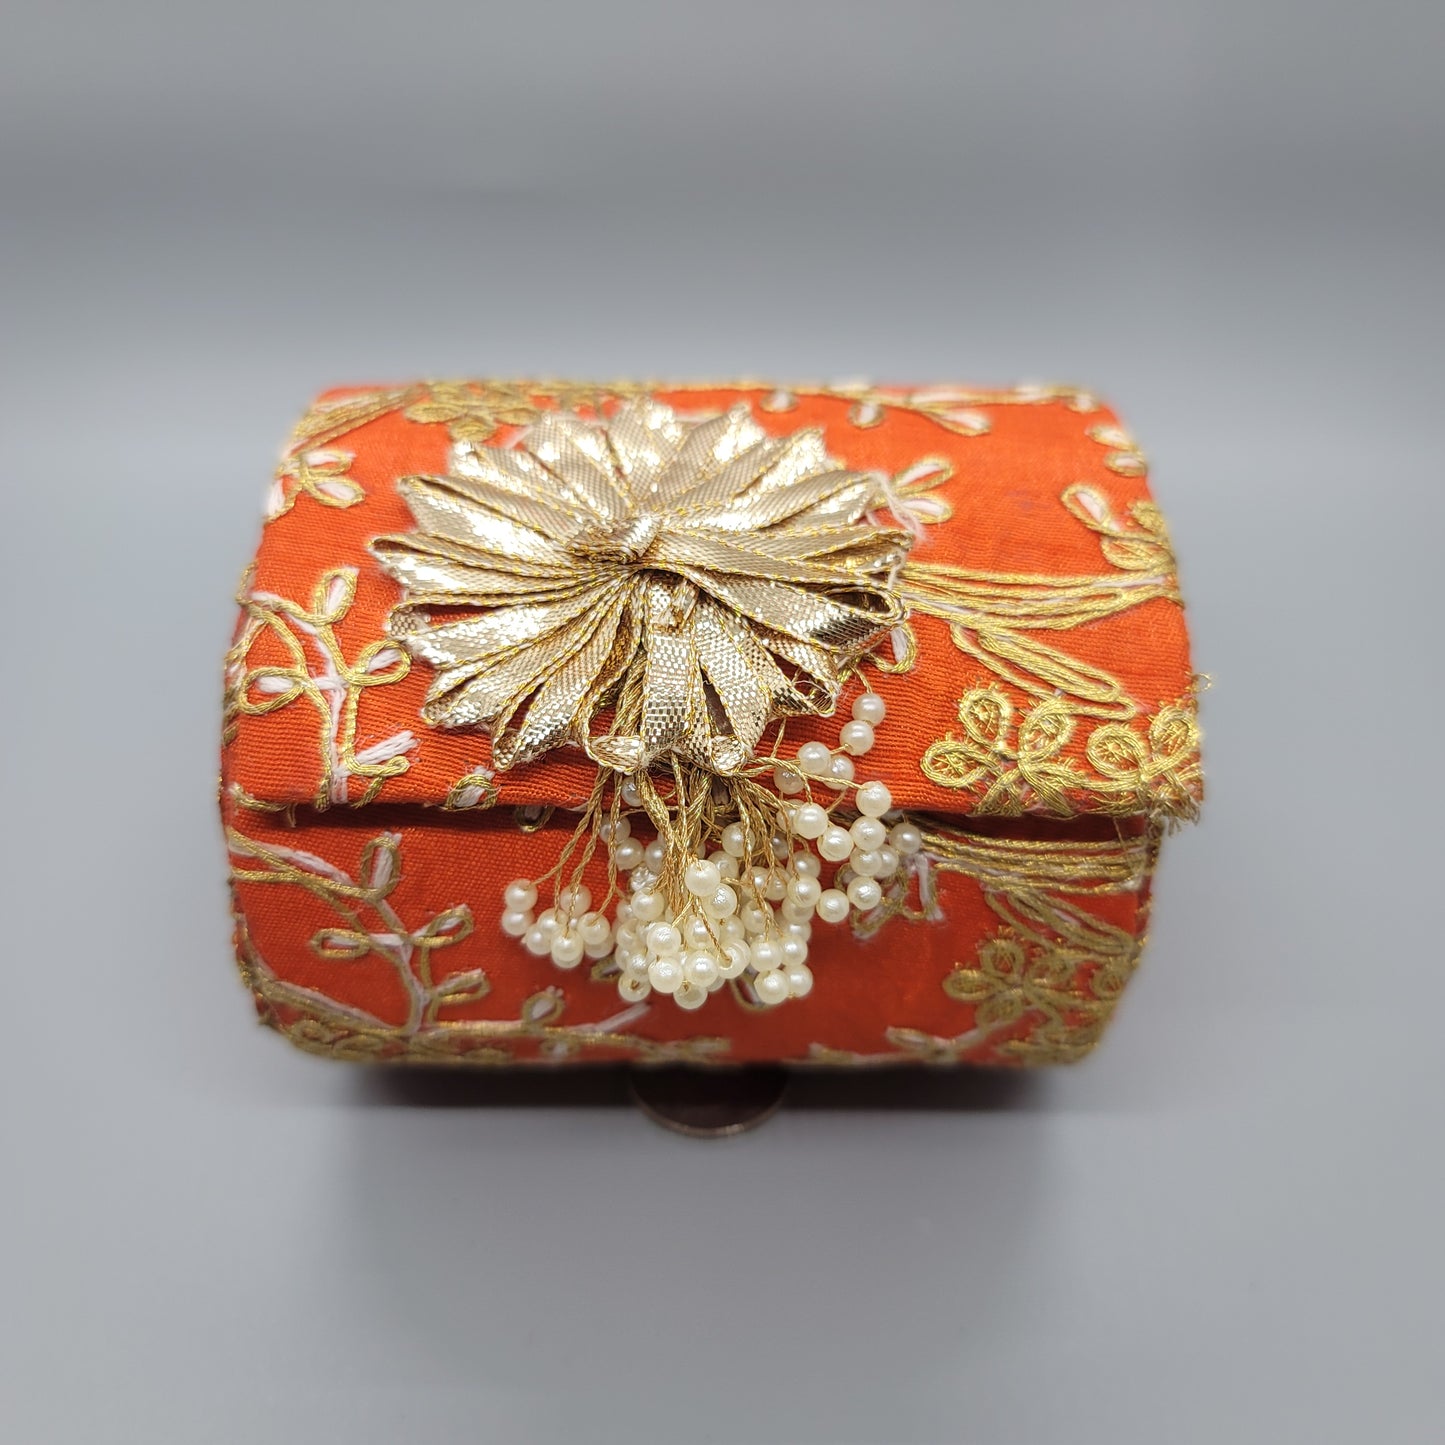 Designer Zardosi Bangle Box With Floral Pearl Hangings